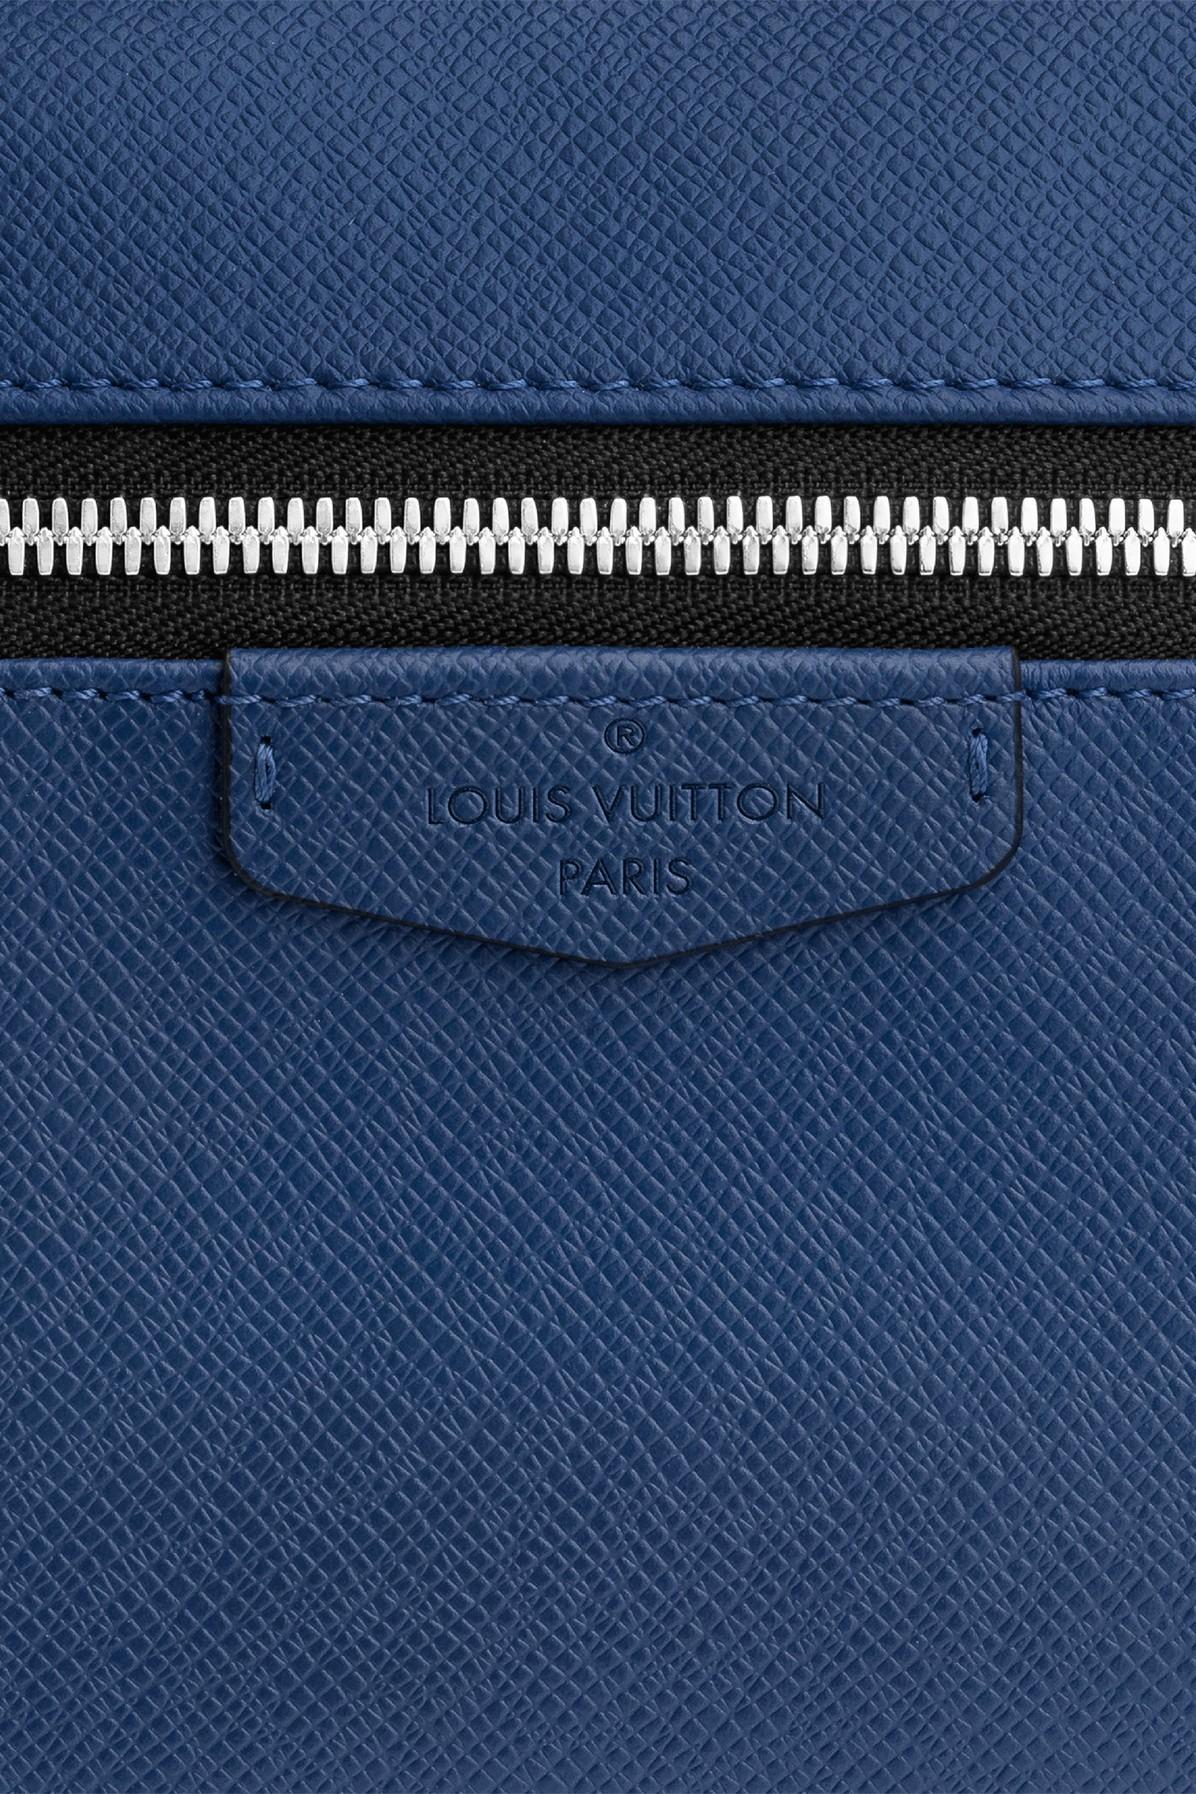 Louis Vuitton Outdoor Bumbag in Blue for Men